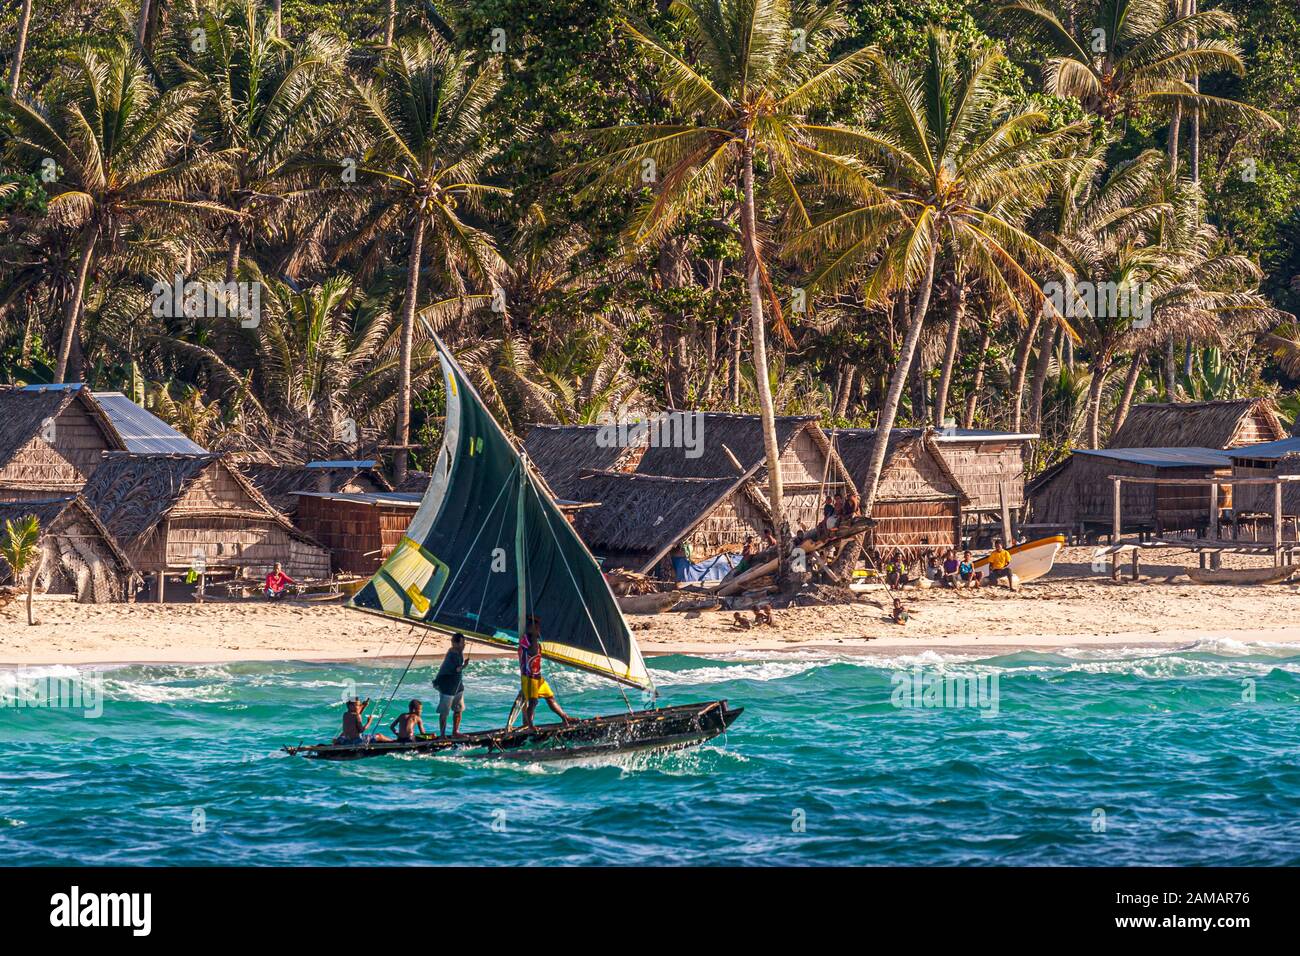 Polynesian style sailing on a Proa (multihull outrigger sailboat) in Papua New Guinea Stock Photo